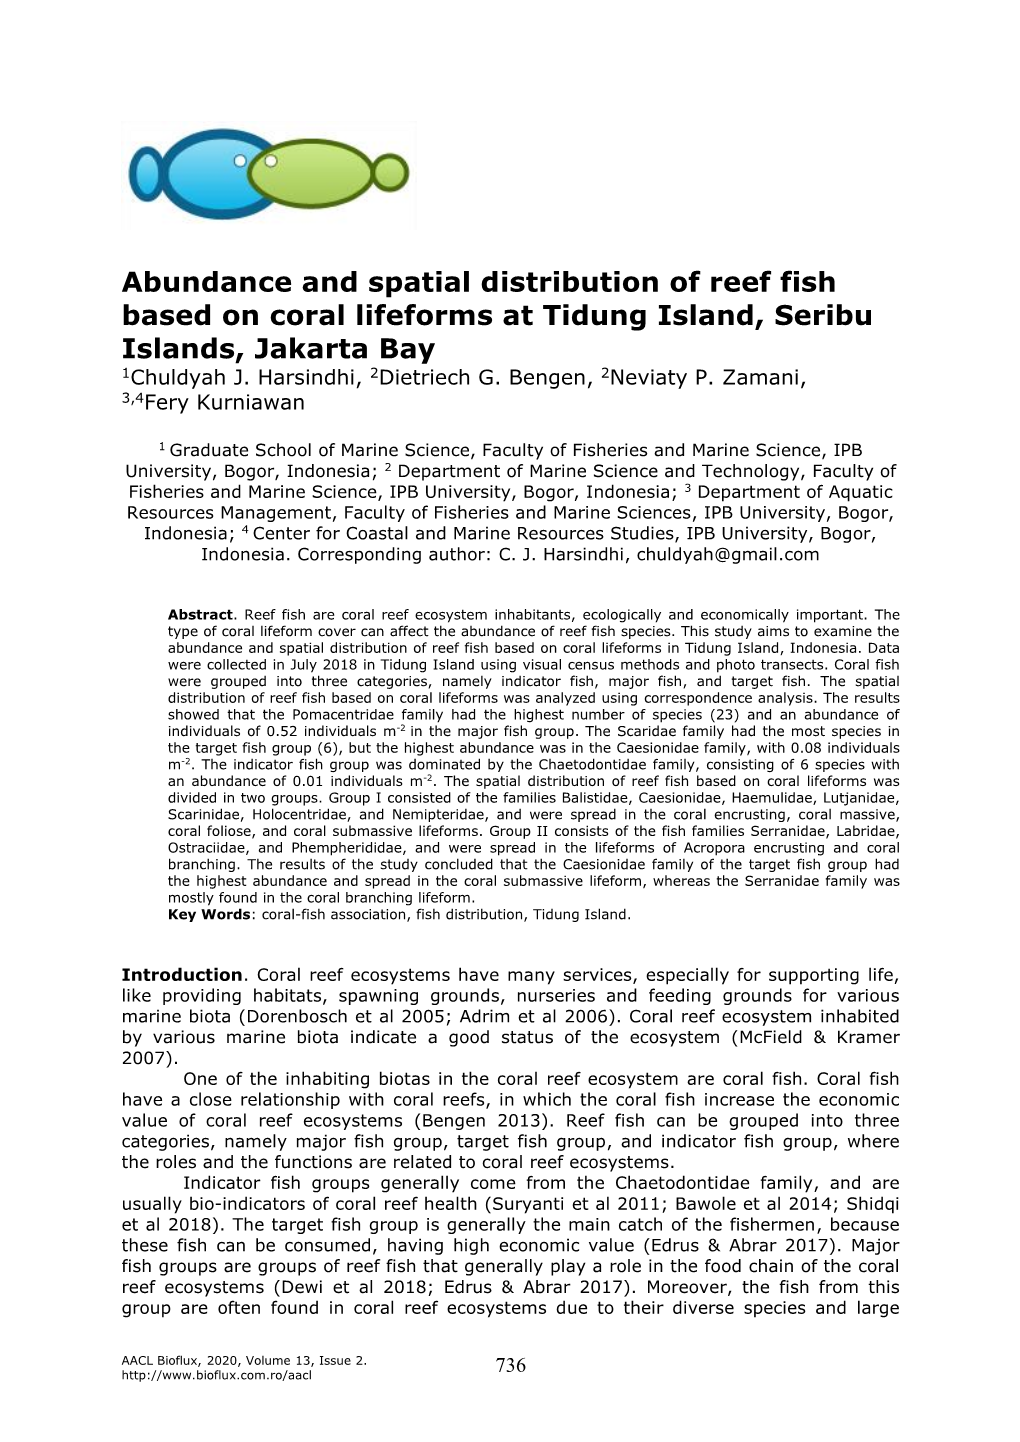 Abundance and Spatial Distribution of Reef Fish Based on Coral Lifeforms at Tidung Island, Seribu Islands, Jakarta Bay 1Chuldyah J